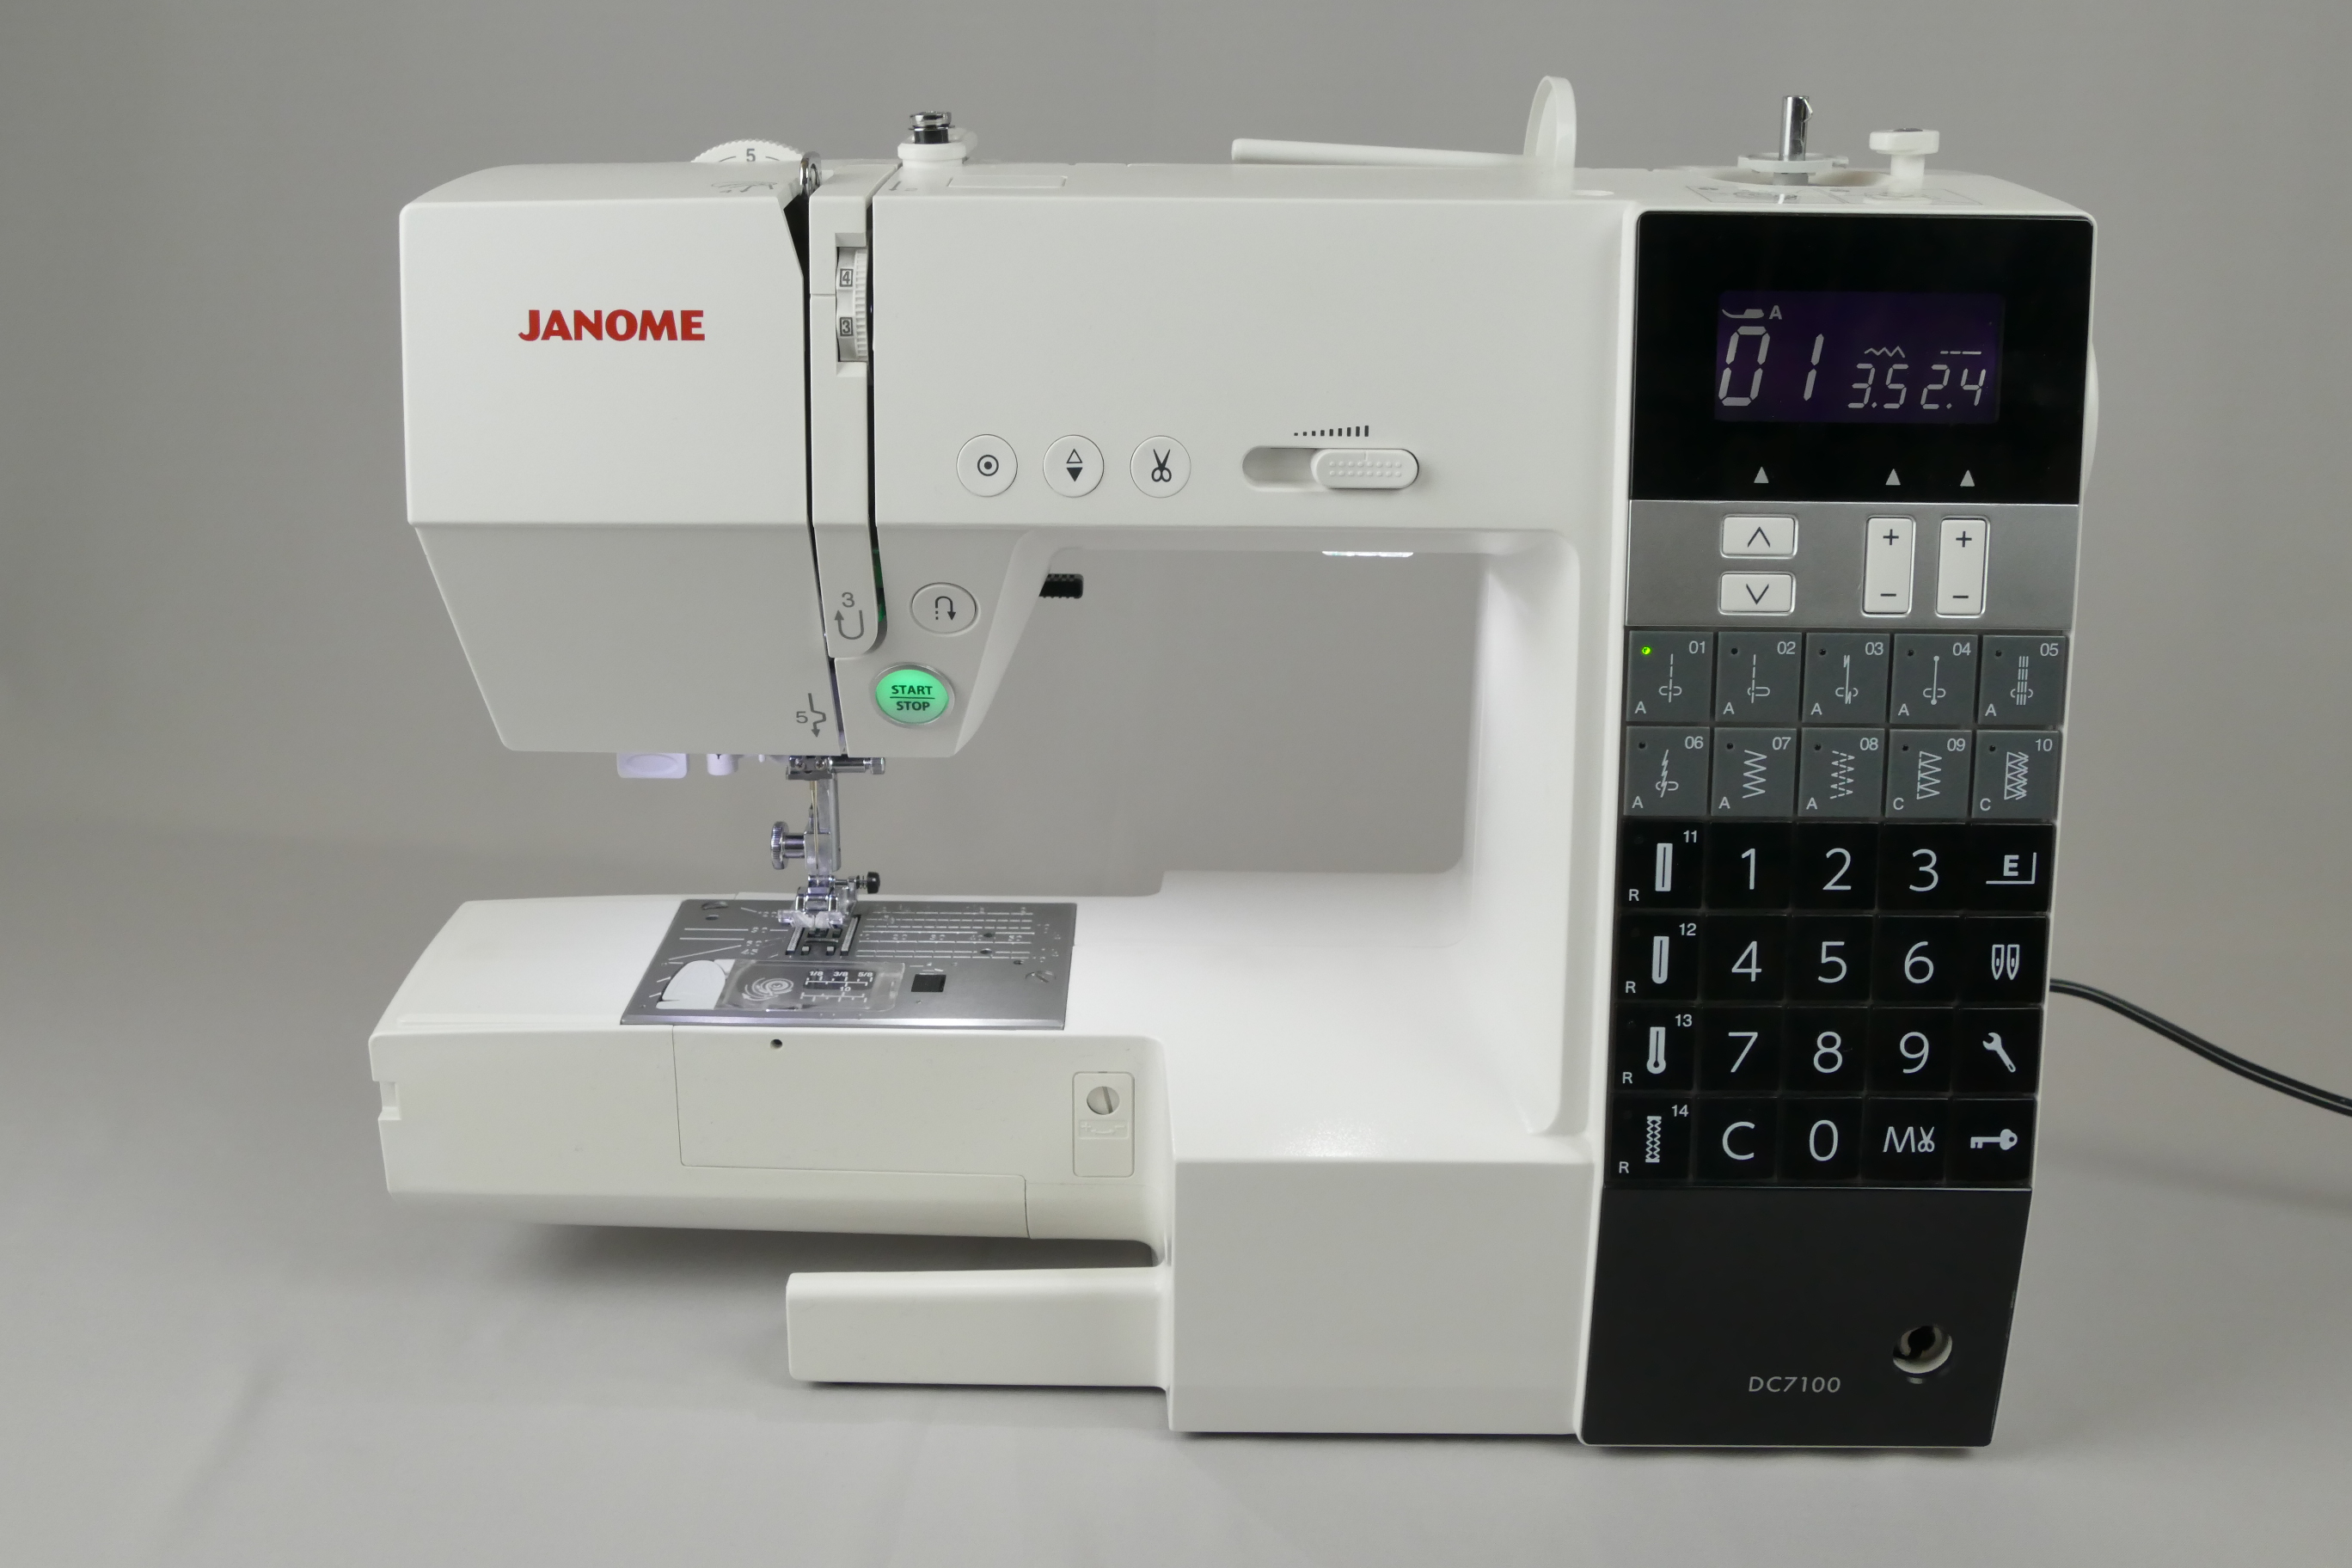 Janome DC7100